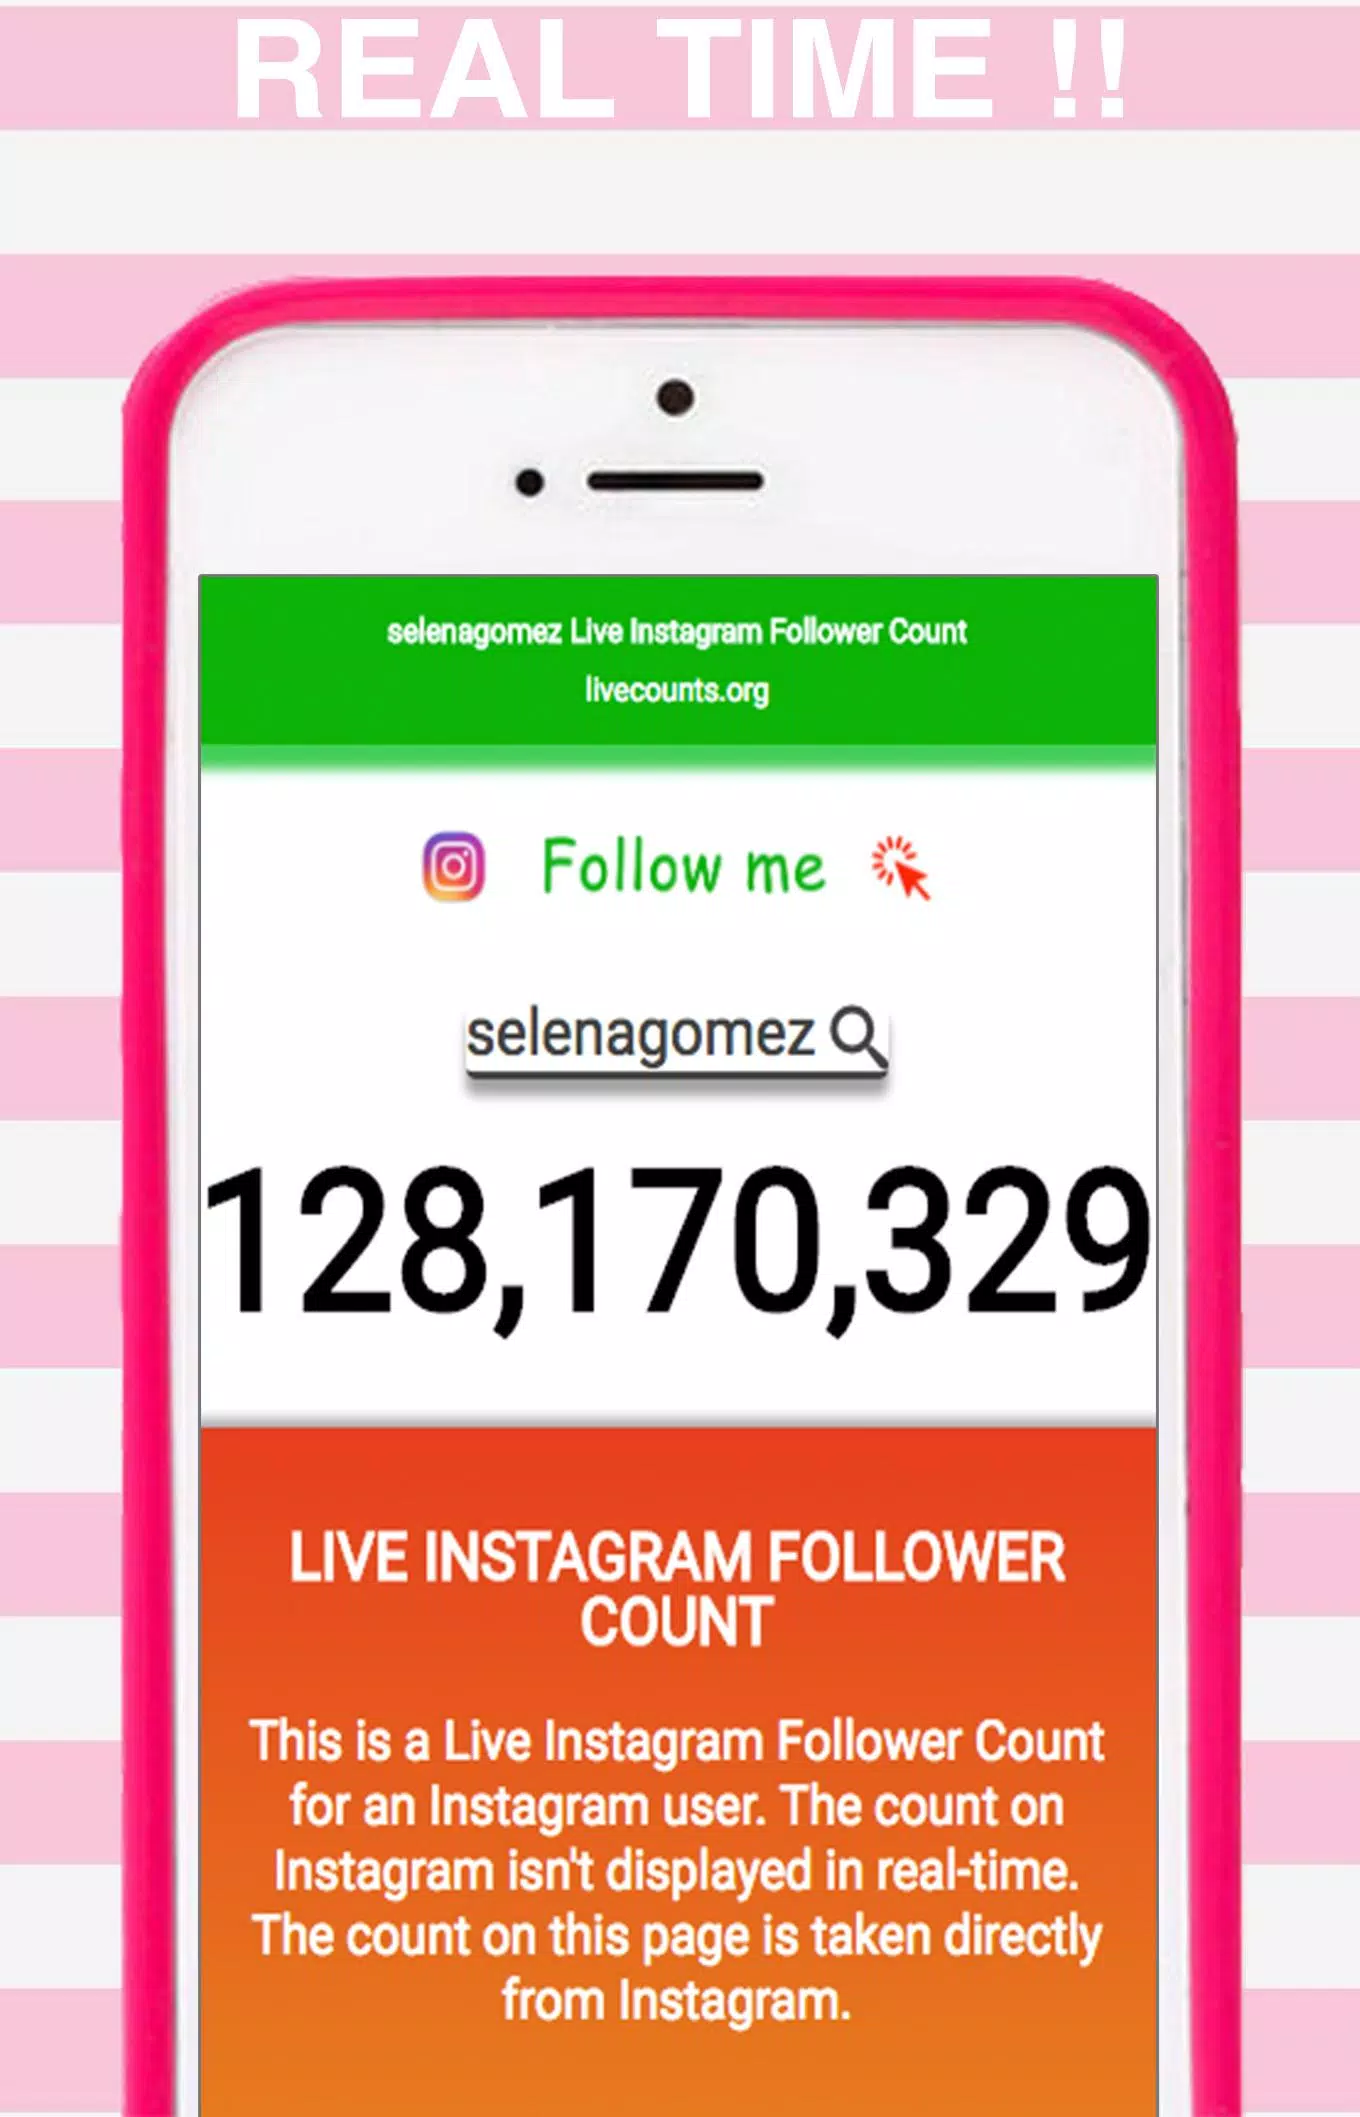 Livecounts on X: Update: The Instagram live count has been